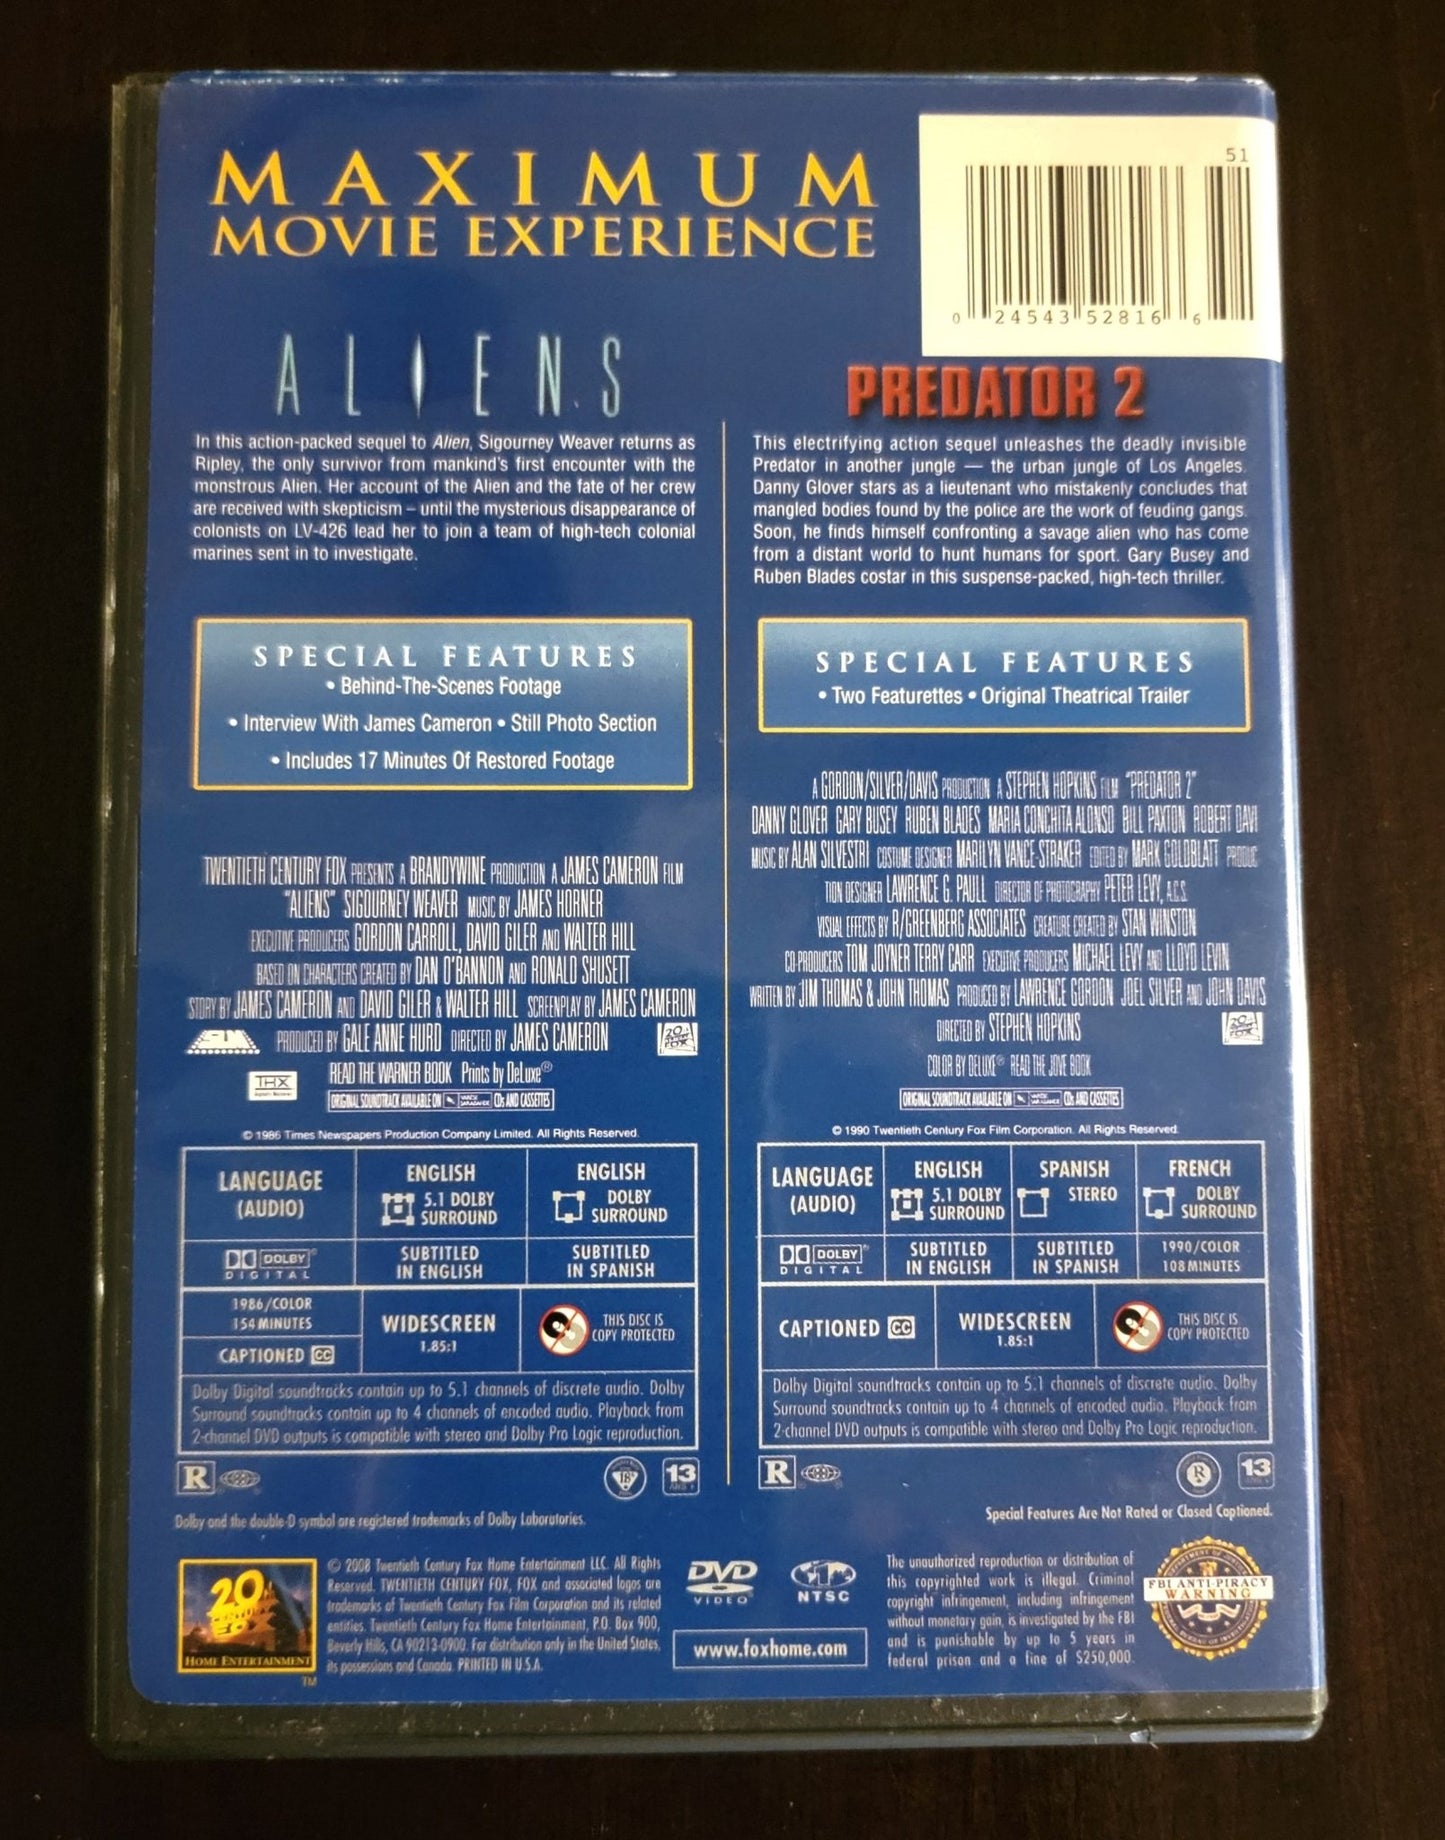 20th Century Fox Home Entertainment - Aliens Predator 2 | DVD | Double Feature 2 DVD Set | Widescreen - DVD - Steady Bunny Shop